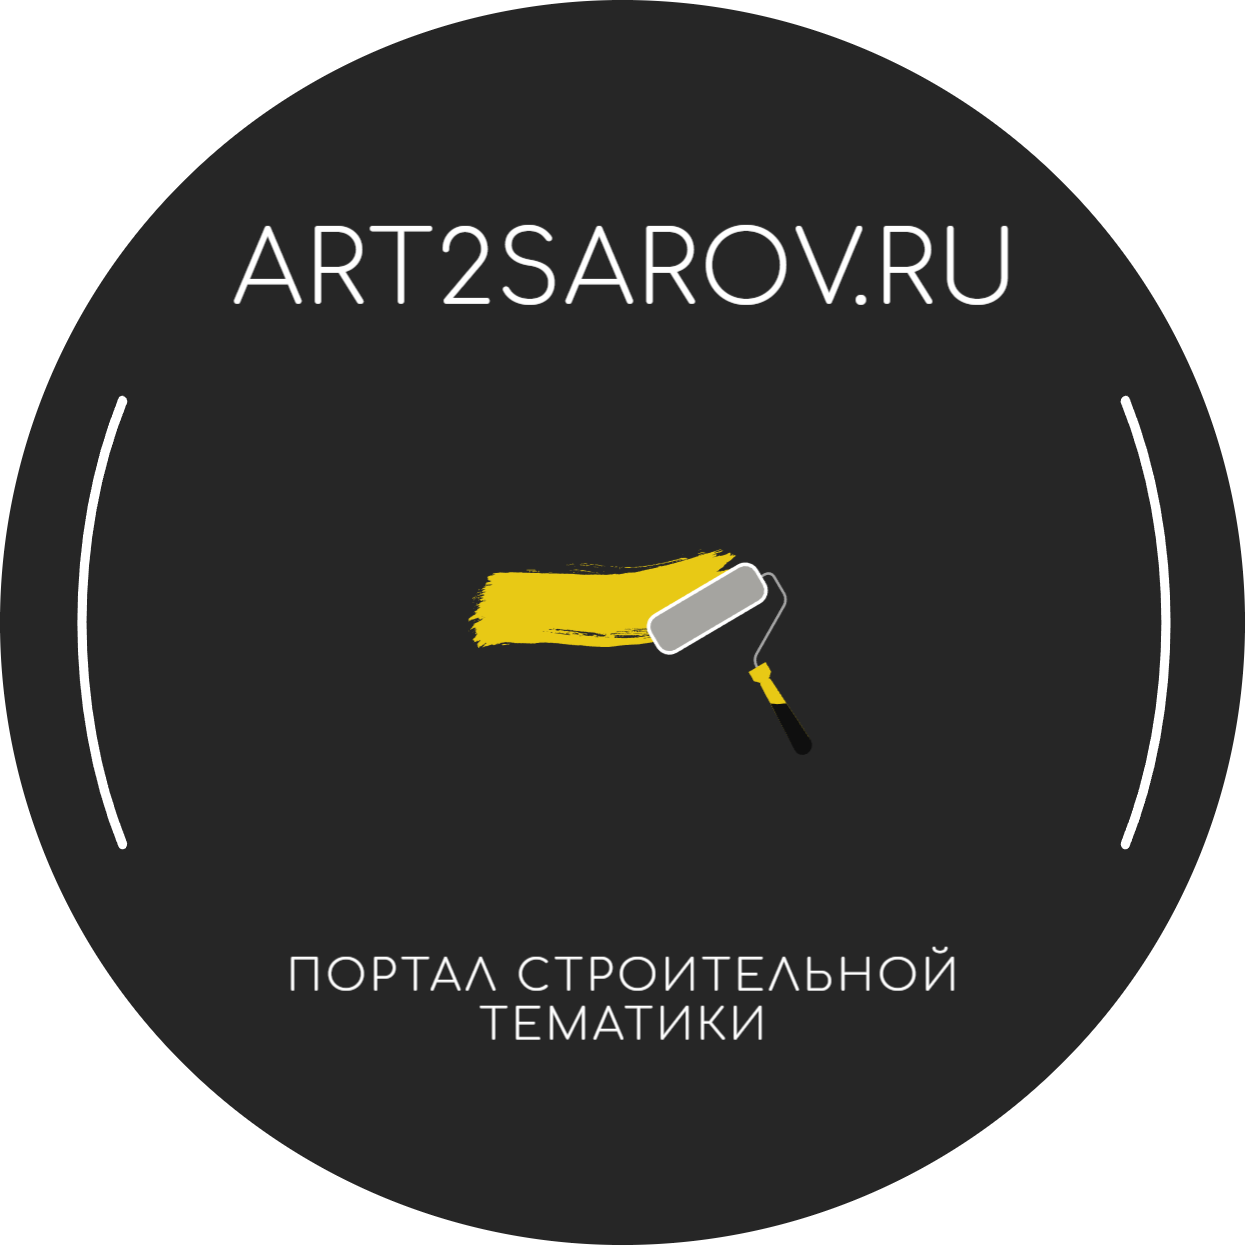 Art2sarov.ru